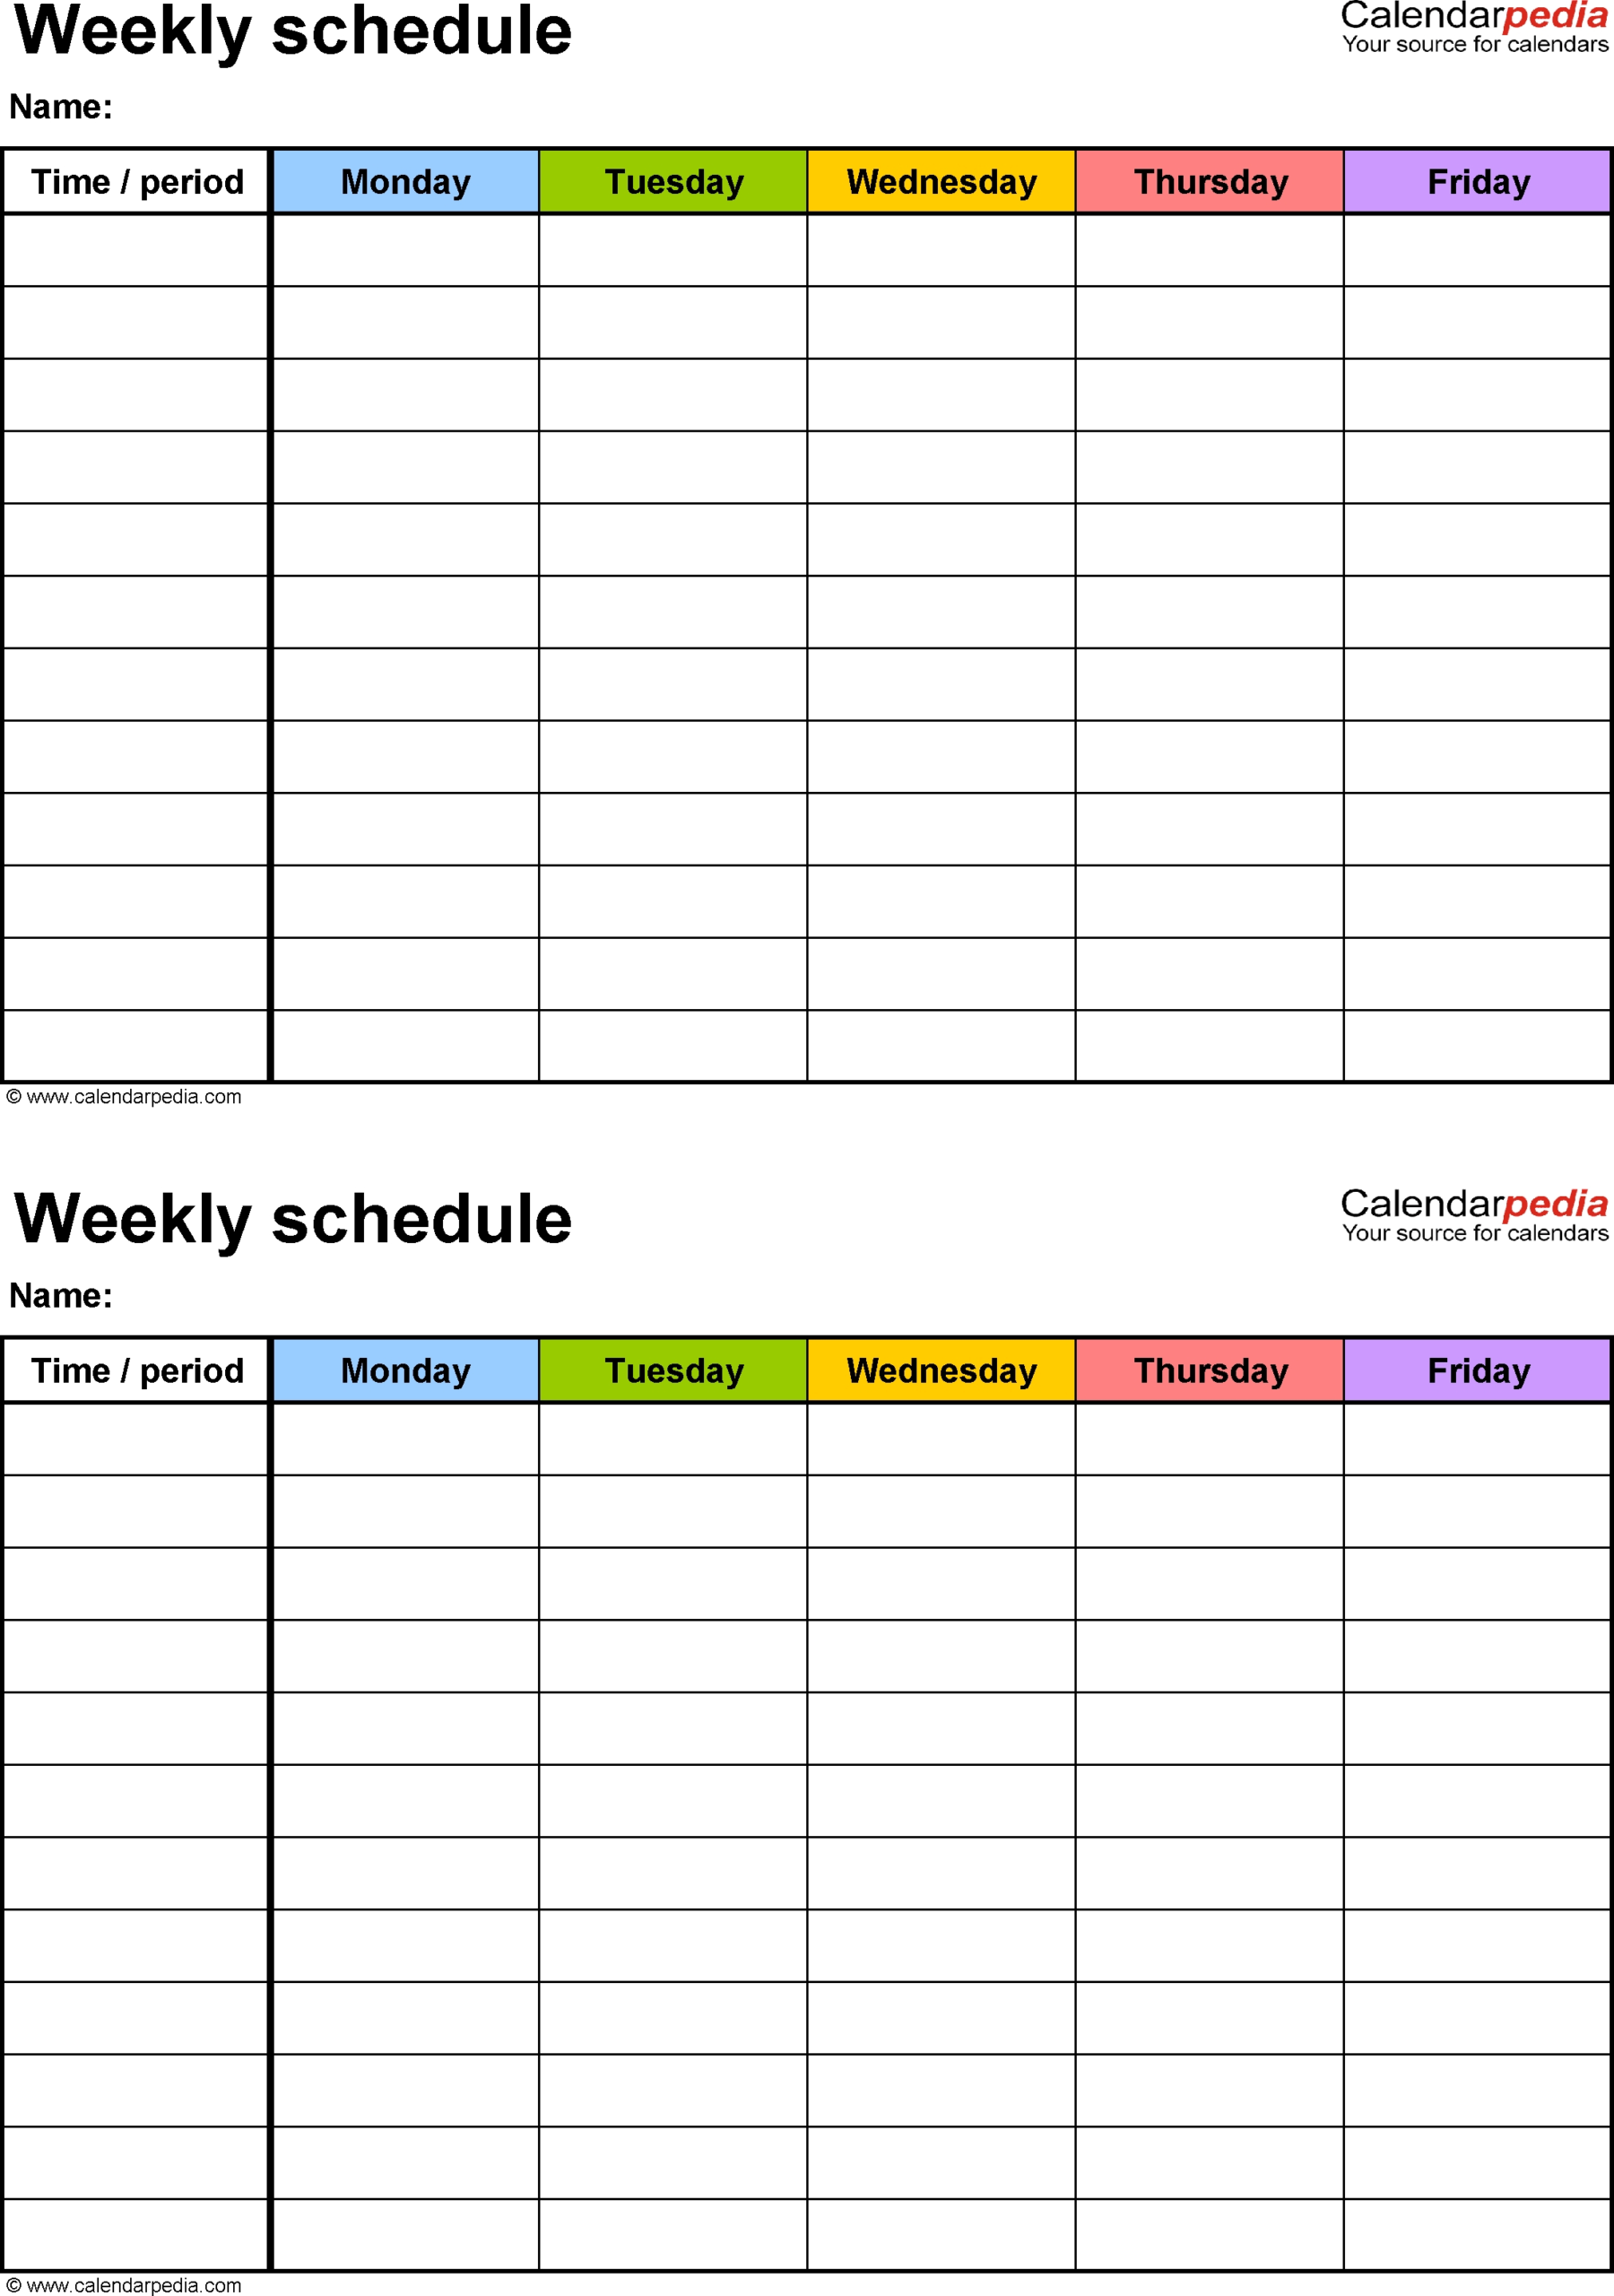 7 Day Week Schedule Calendar Pdf - Calendar Inspiration Design  7 Day Weekly Planner